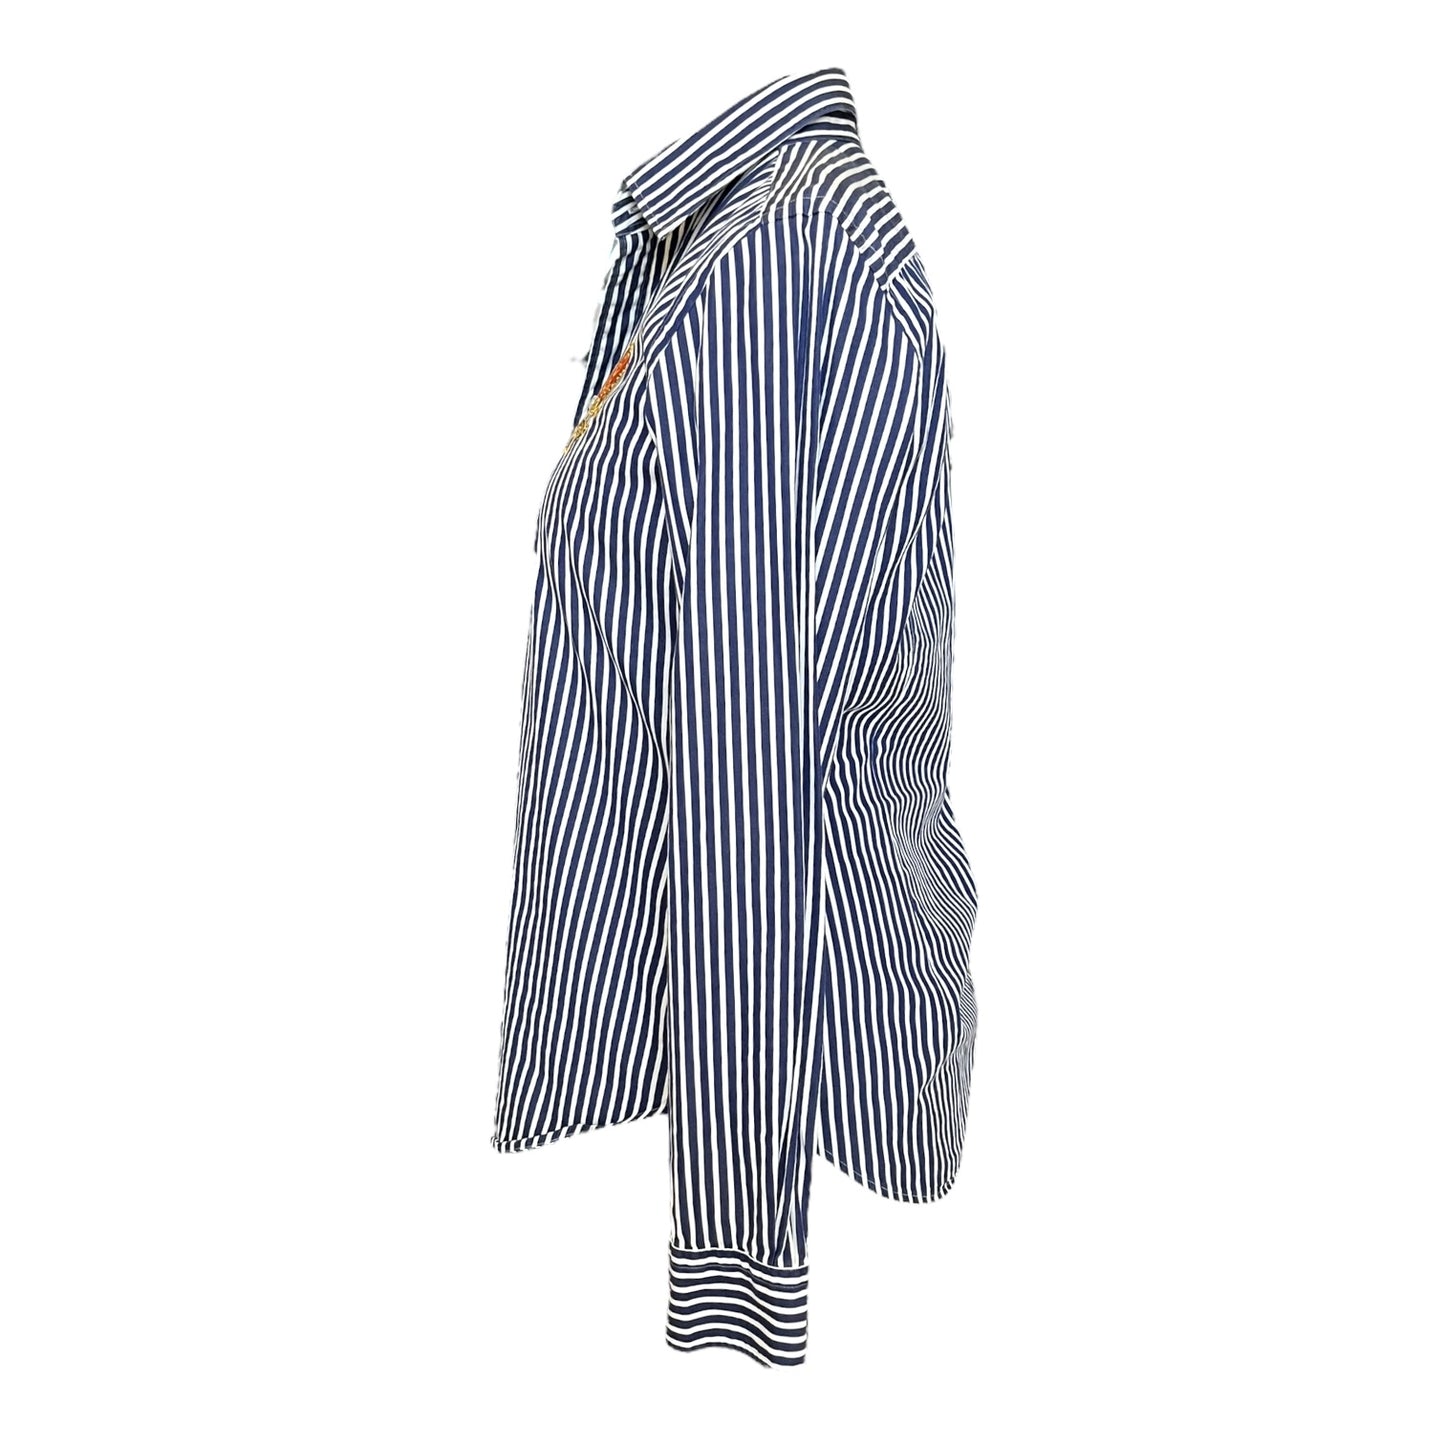 Ralph Lauren Blue and White Stripe Shirt - 12